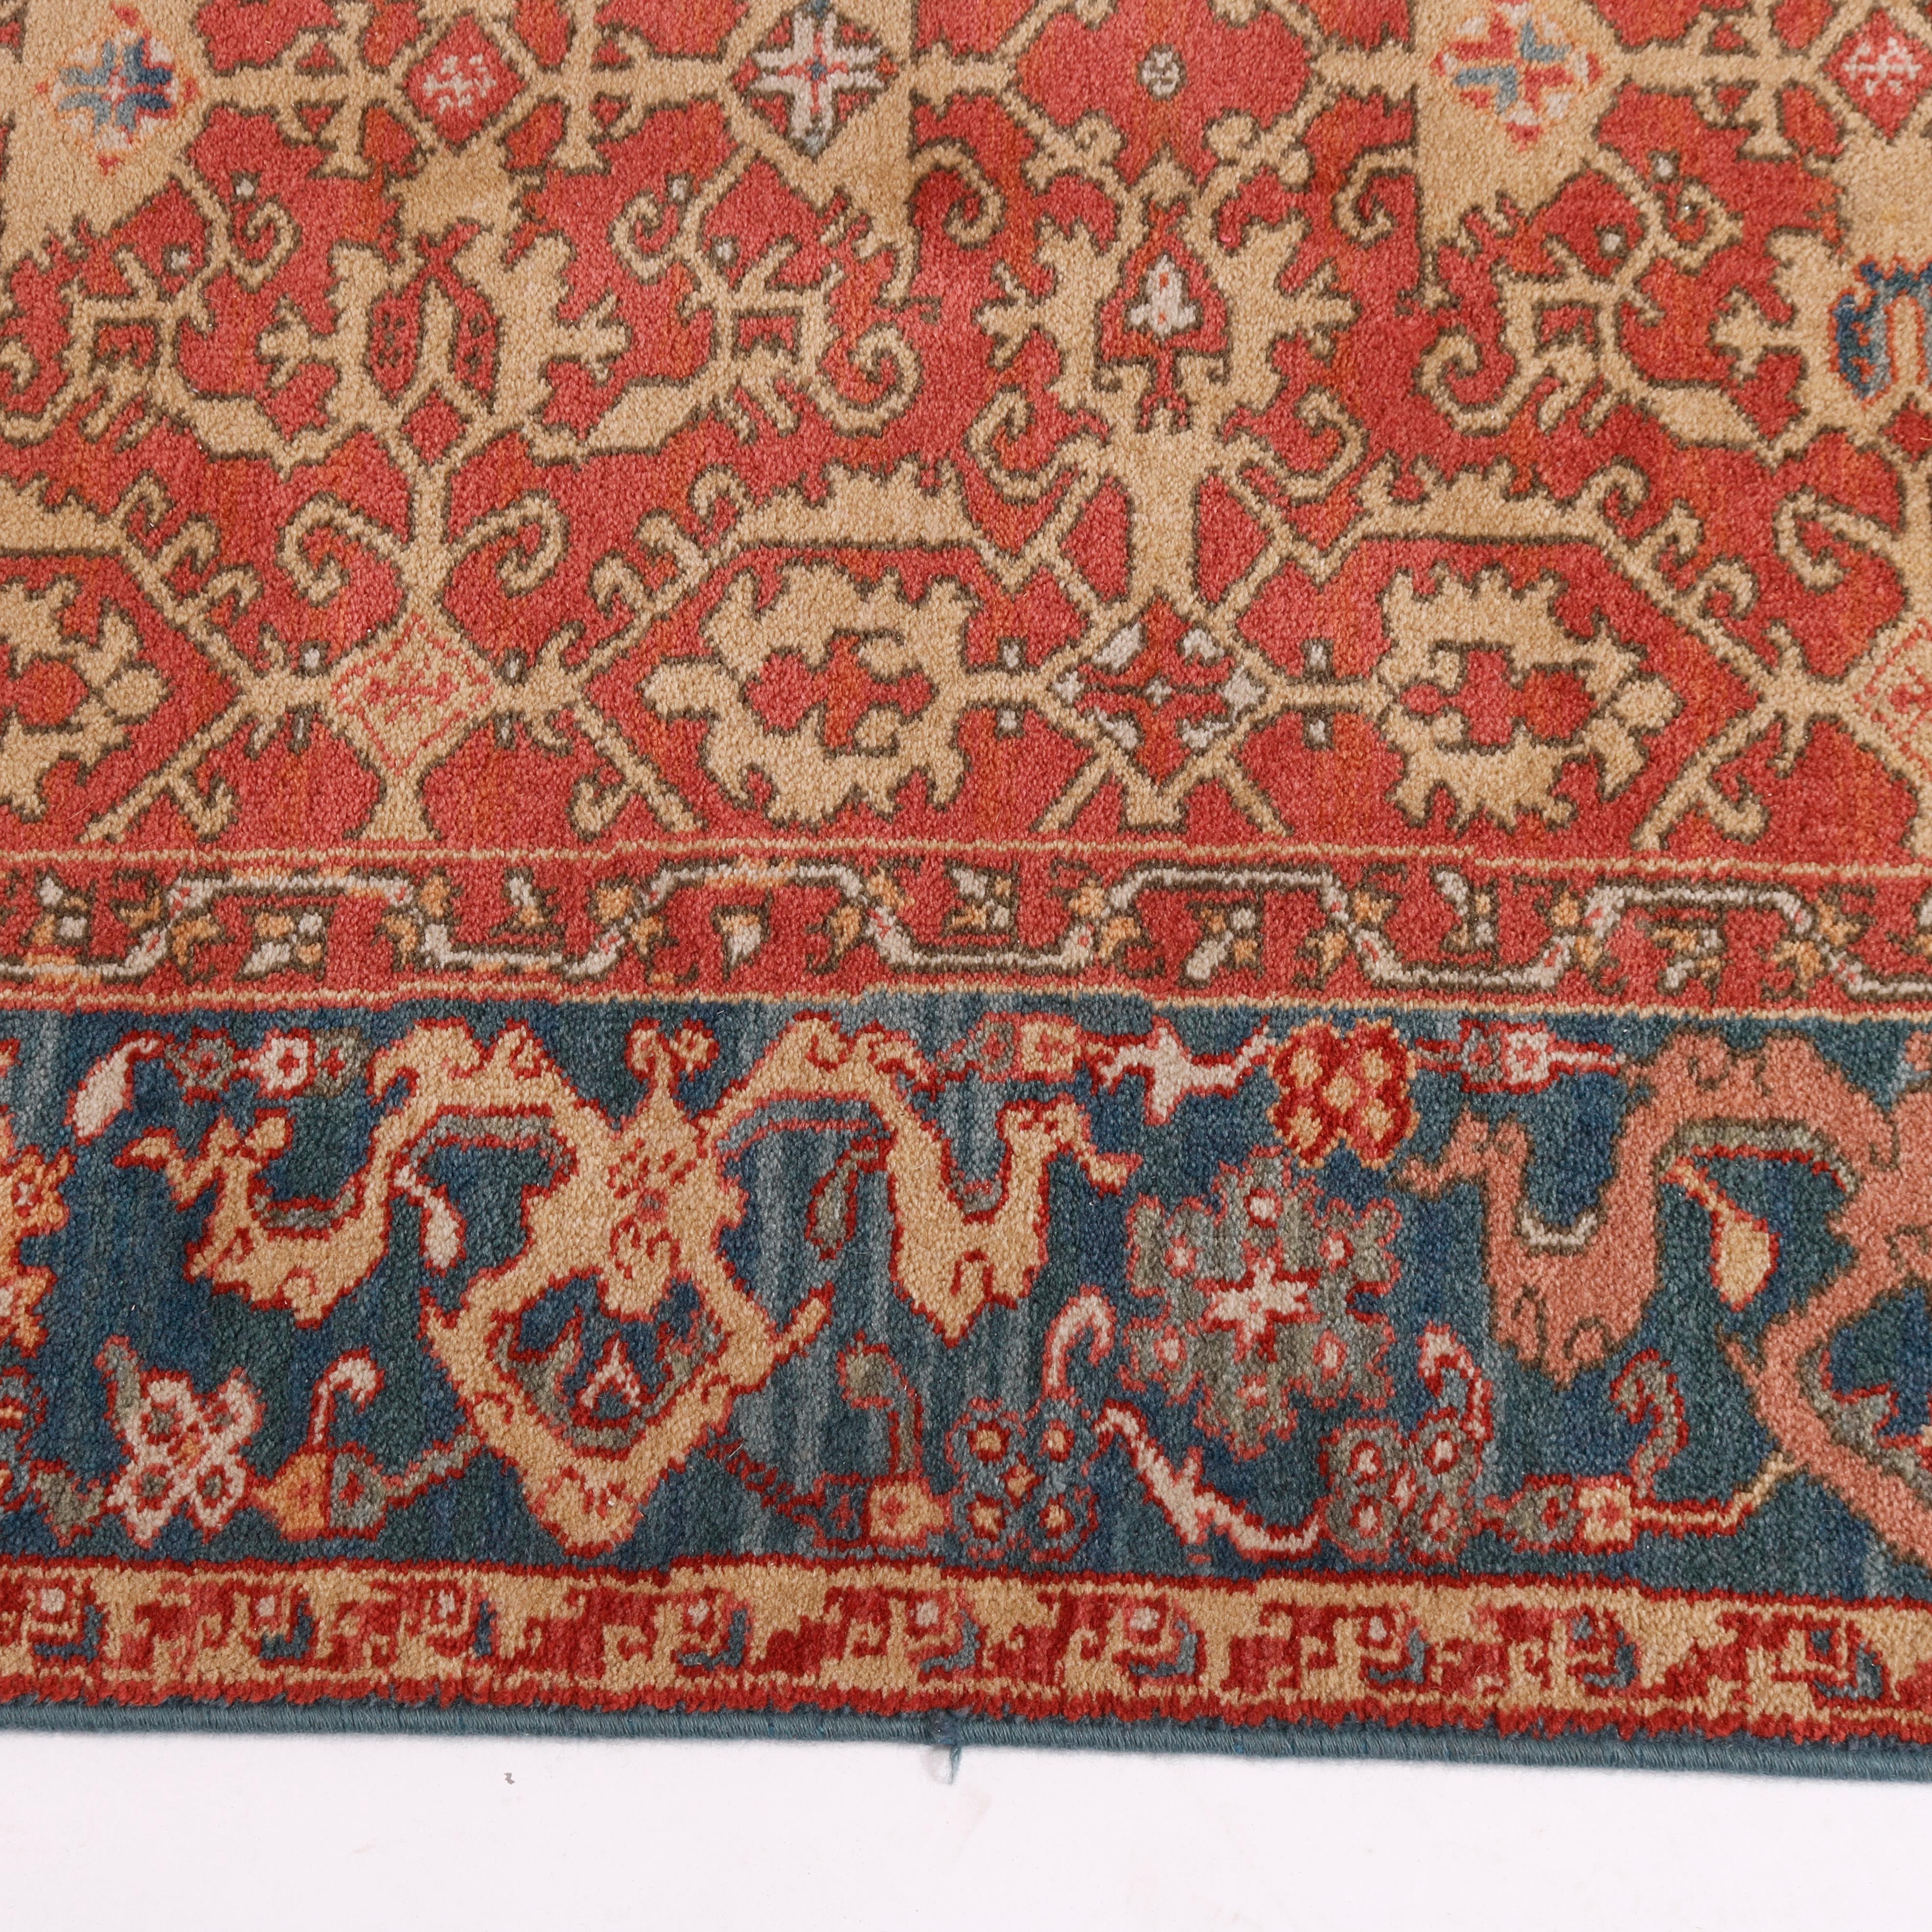 Colonial Williamsburg Karastan Ushak Oriental Rug, Pattern 552, 20th C 5